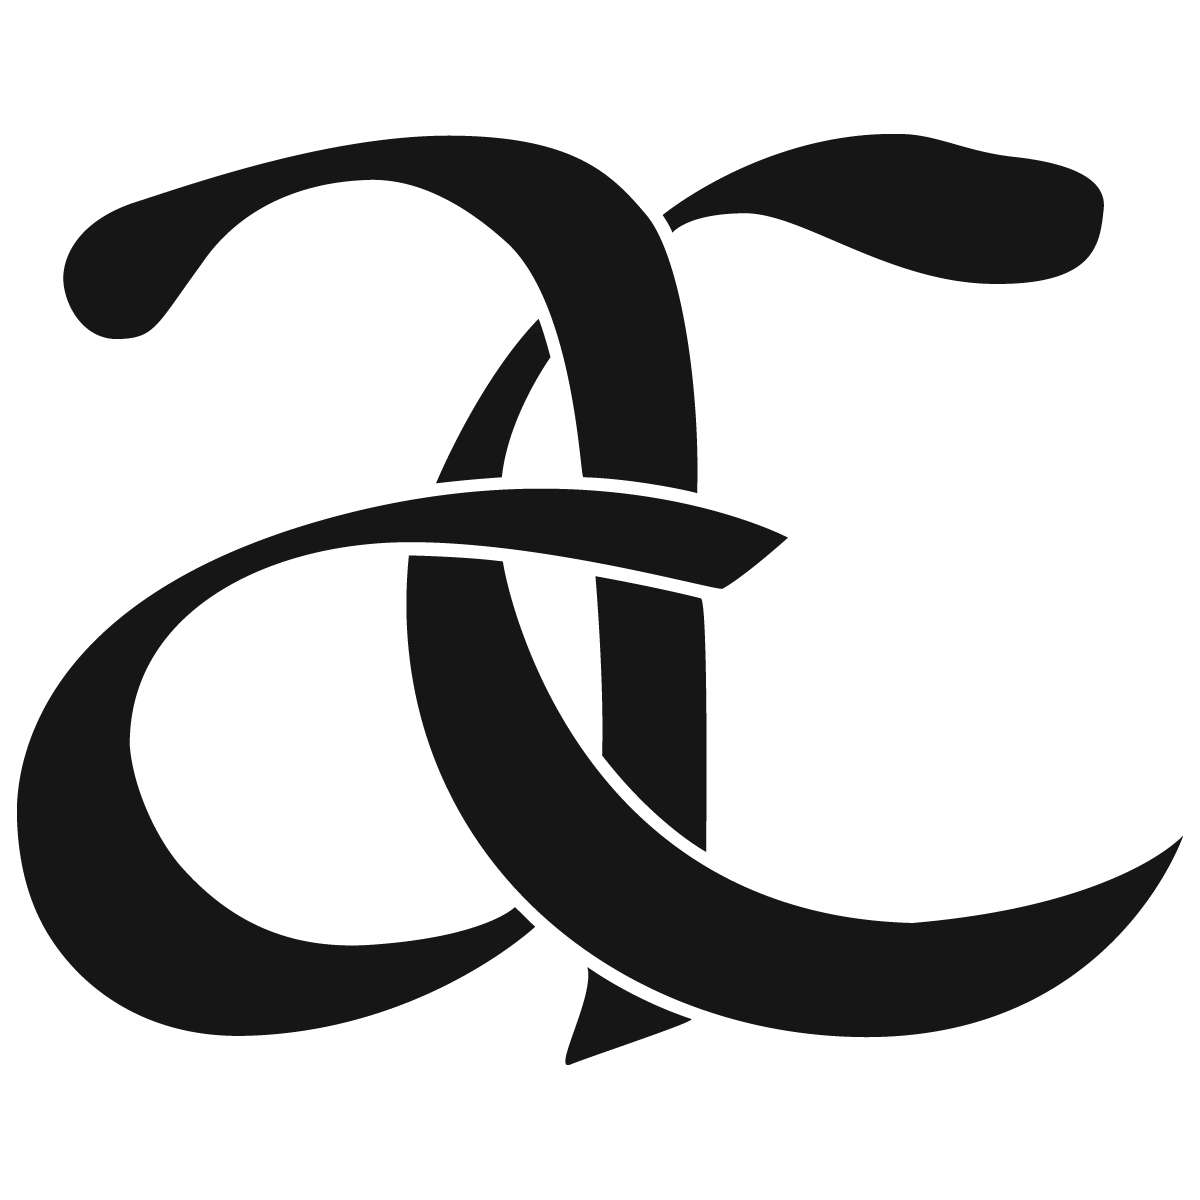 Ac Logos - EroFound